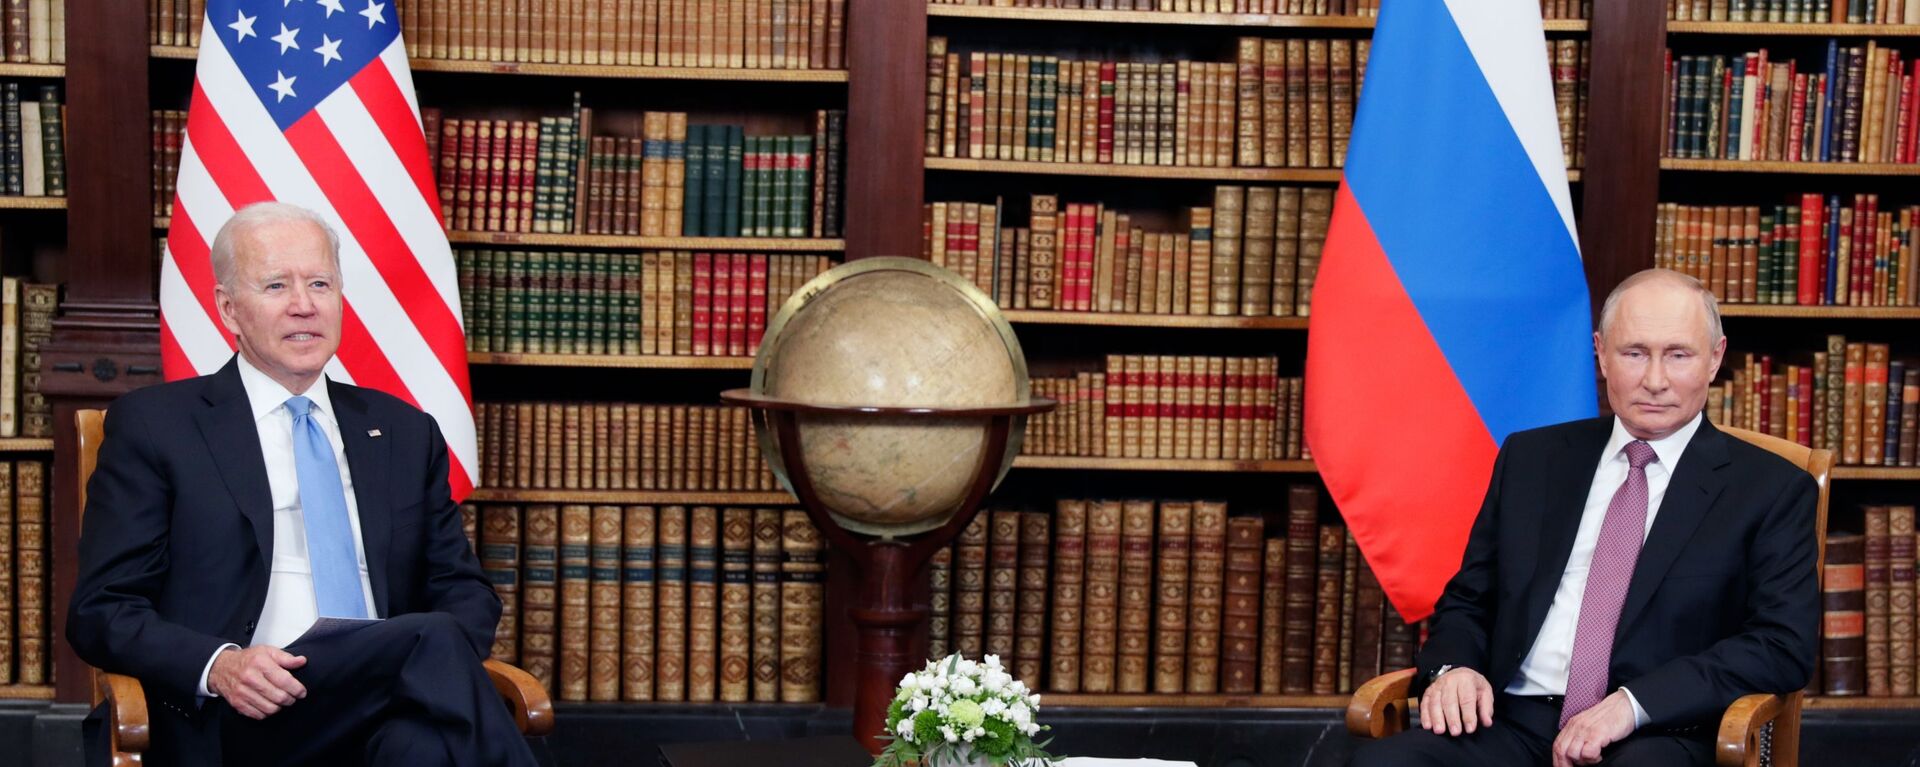 Президент РФ Владимир Путин и президент США Джо Байден во время встречи в Женеве на вилле Ла Гранж - Sputnik Молдова, 1920, 29.11.2021